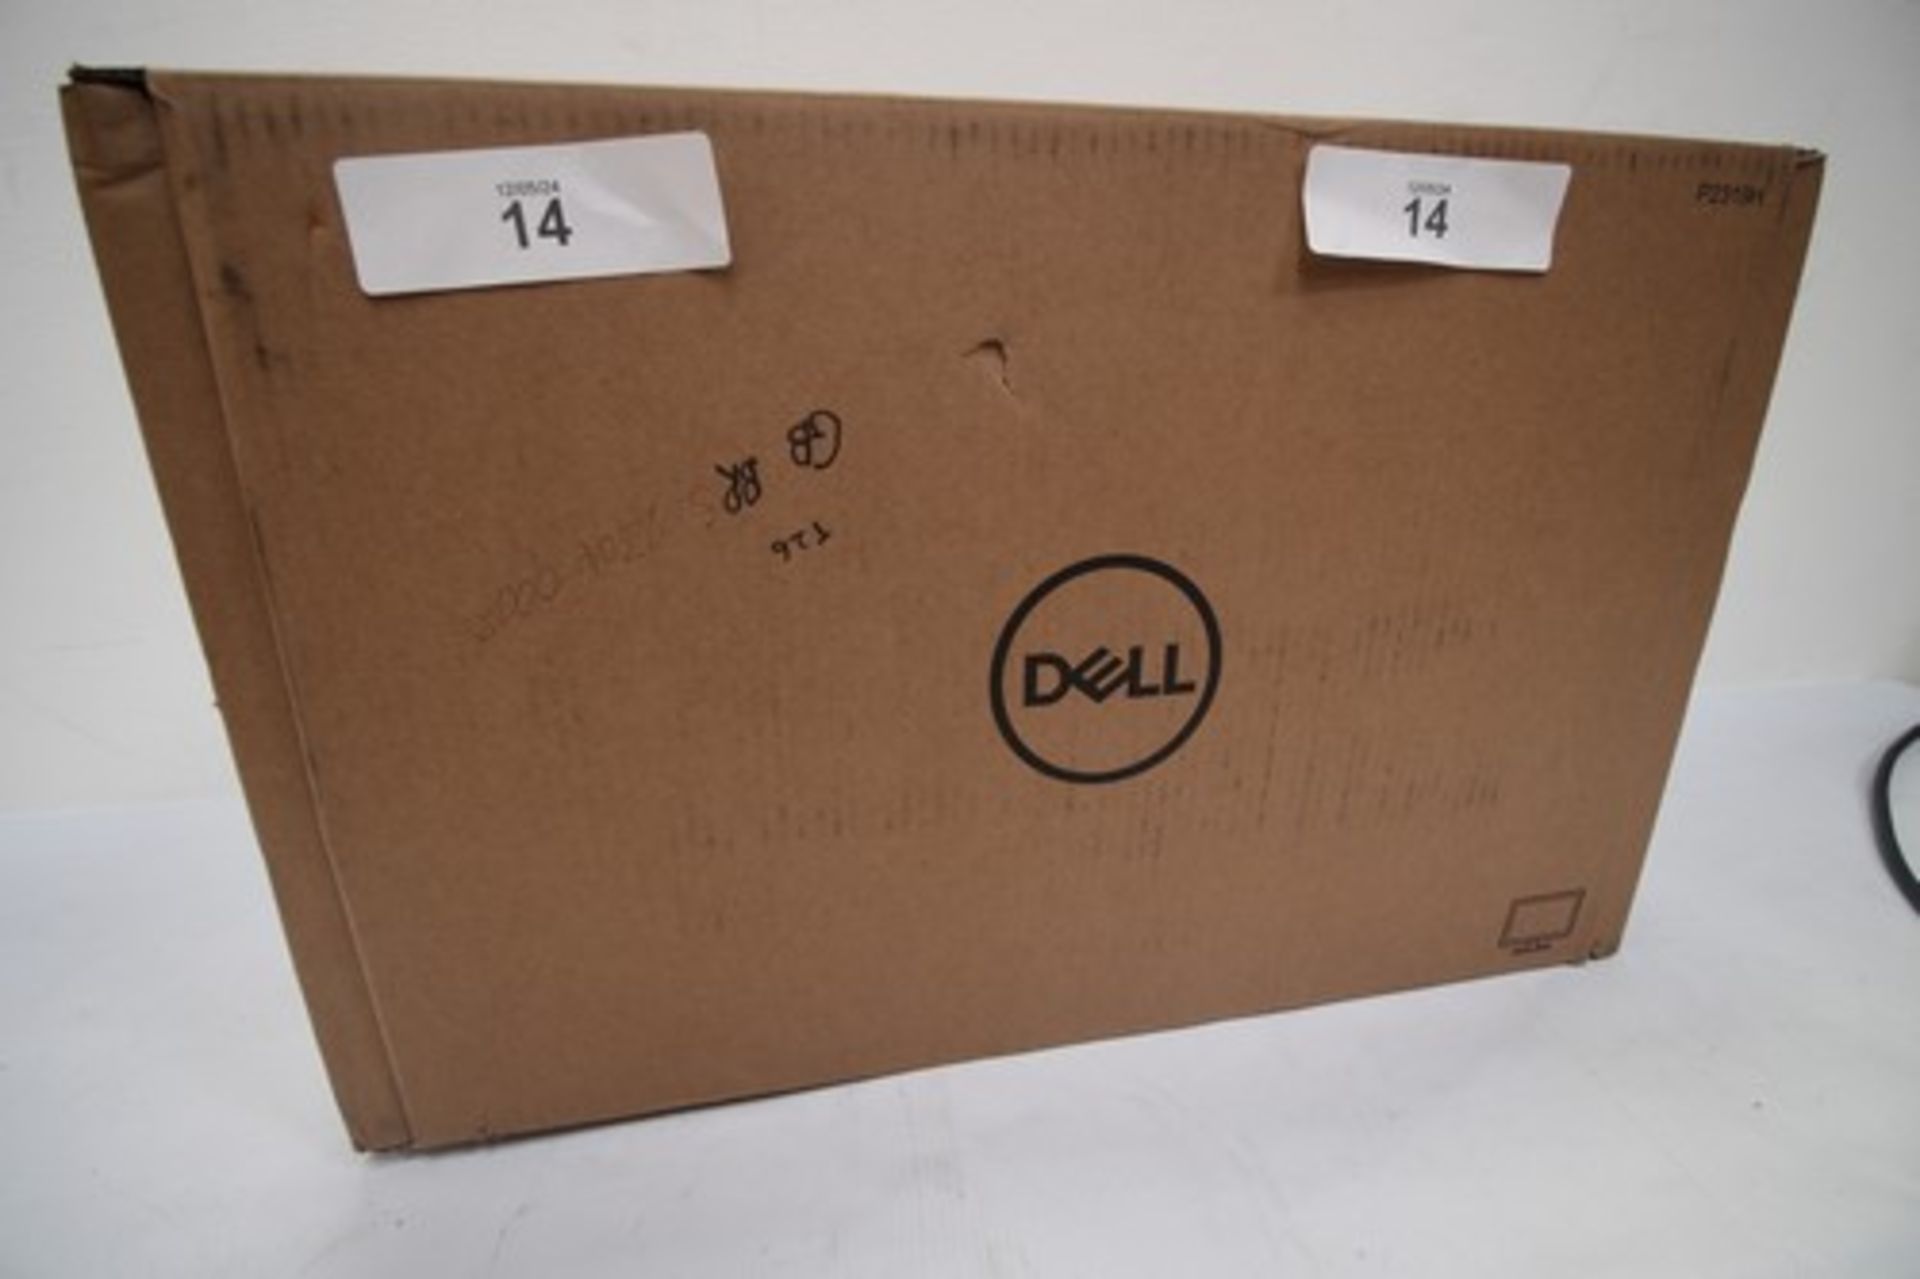 1 x Dell 23" monitor, model No: P2319H - new in box (ES3 cage) - Image 3 of 3